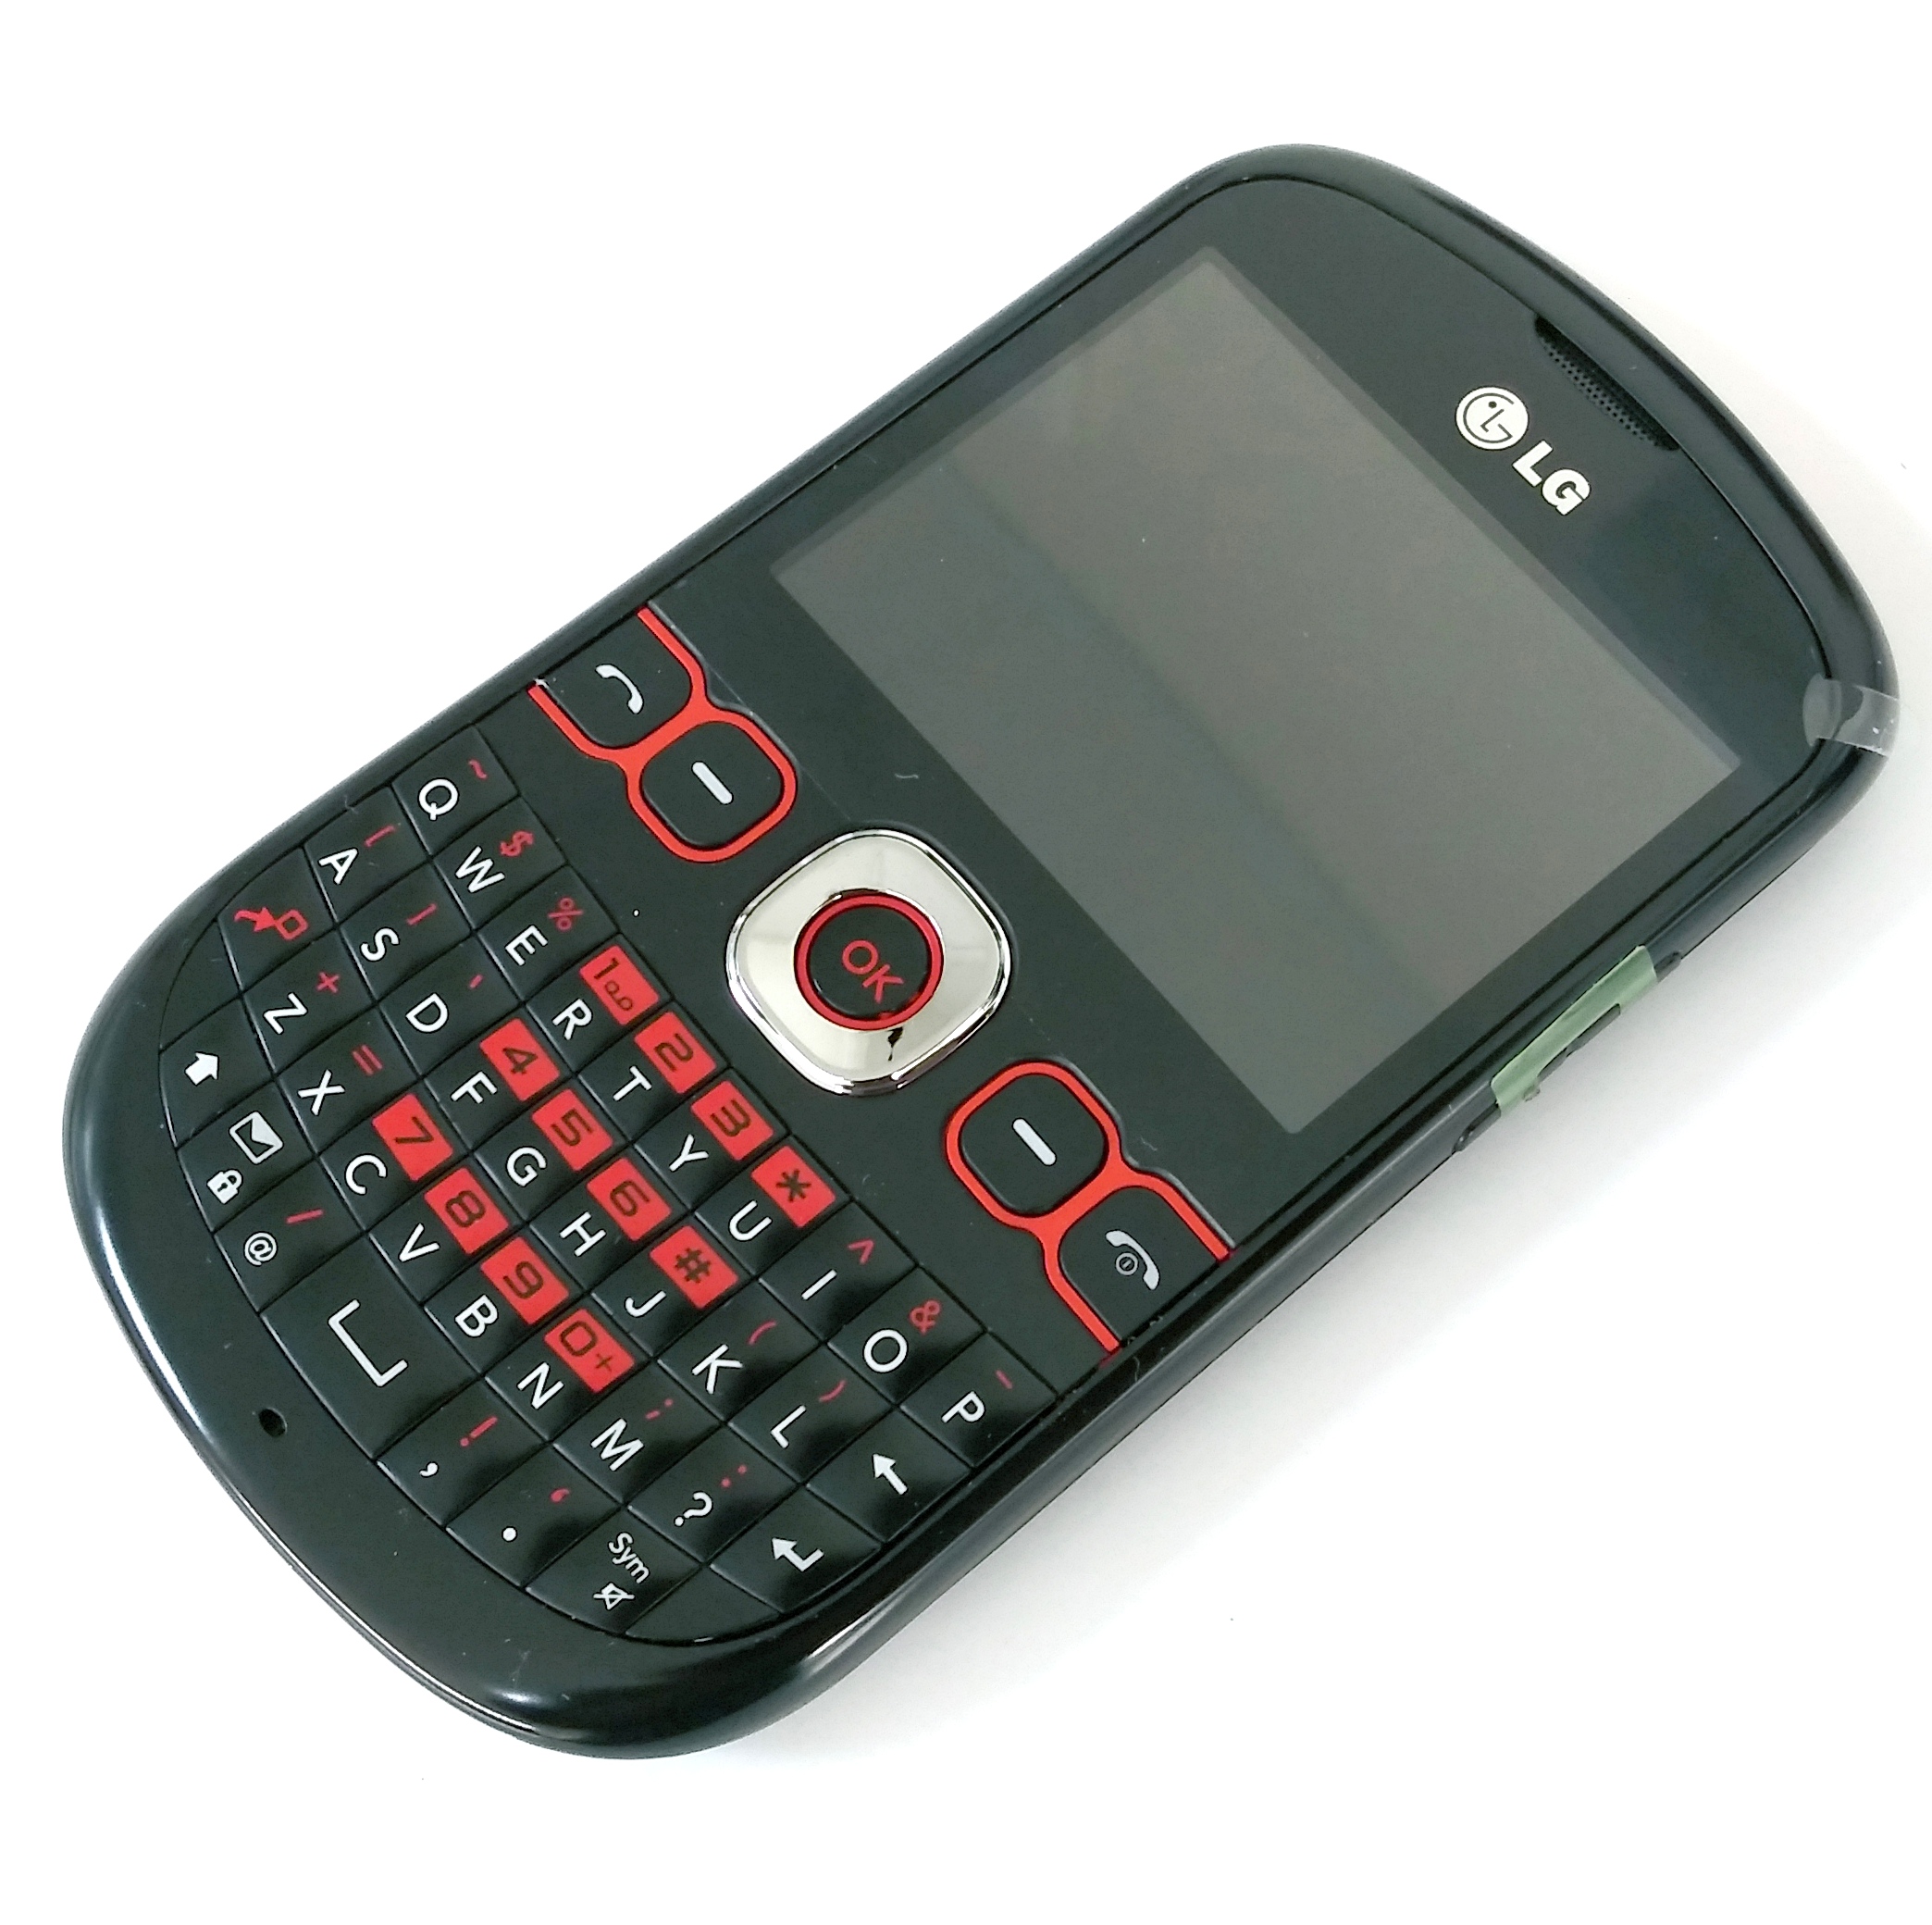 LG C305 GSM Unlocked QuadBand QWERTY Keyboard Texting Phone,